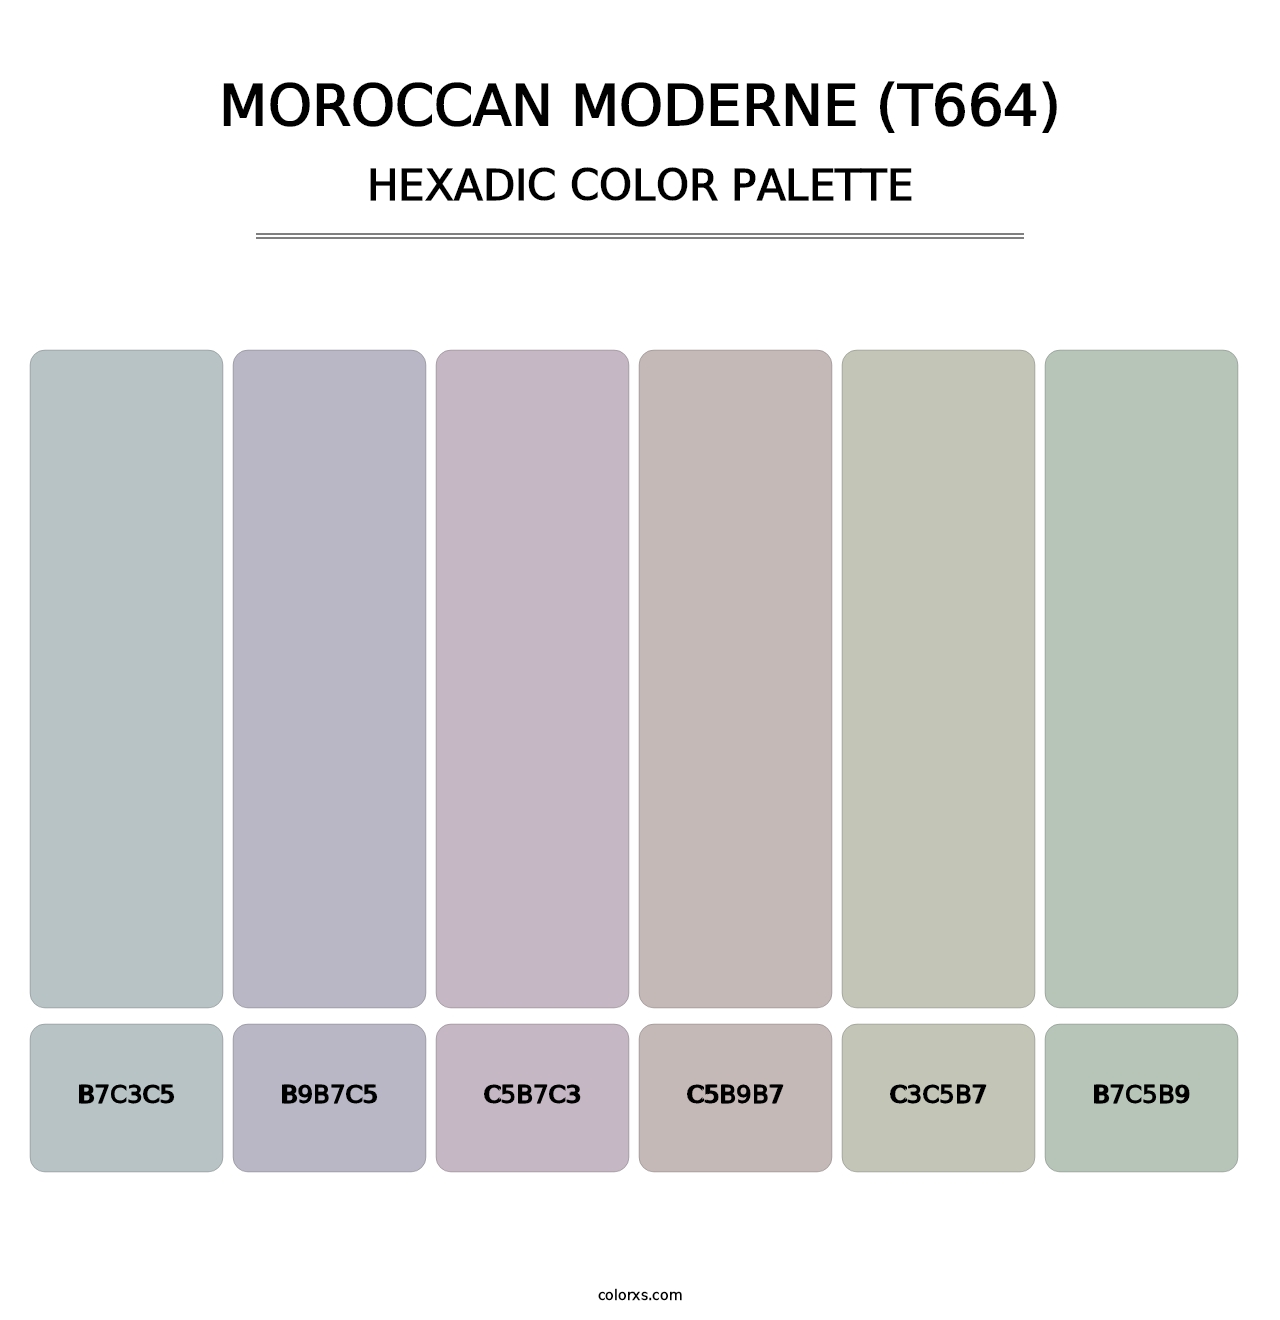 Moroccan Moderne (T664) - Hexadic Color Palette